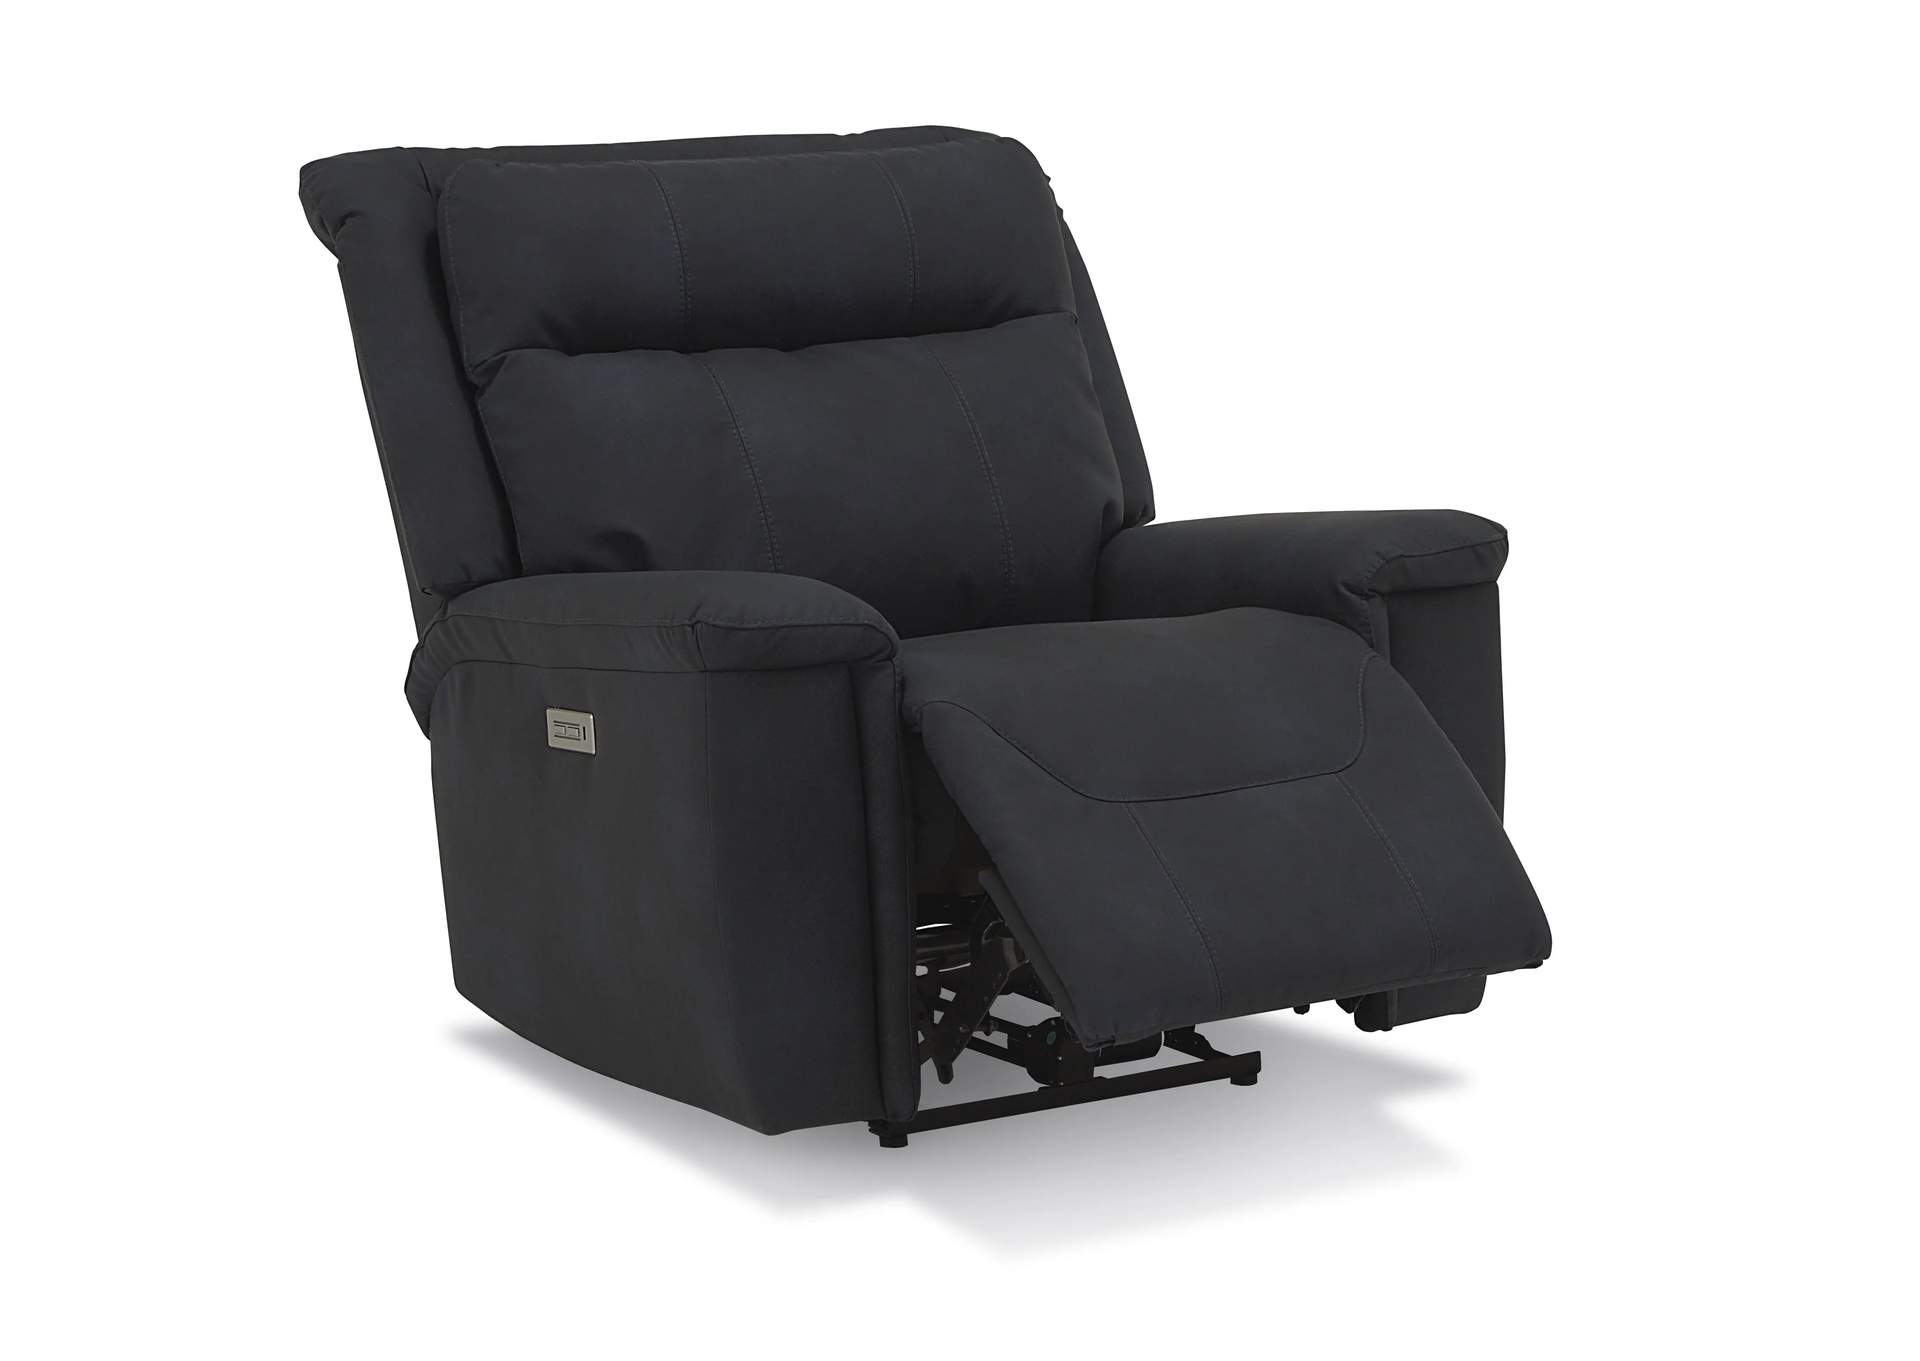 Strata Chair Swivel Rocker Recliner,Palliser Furniture